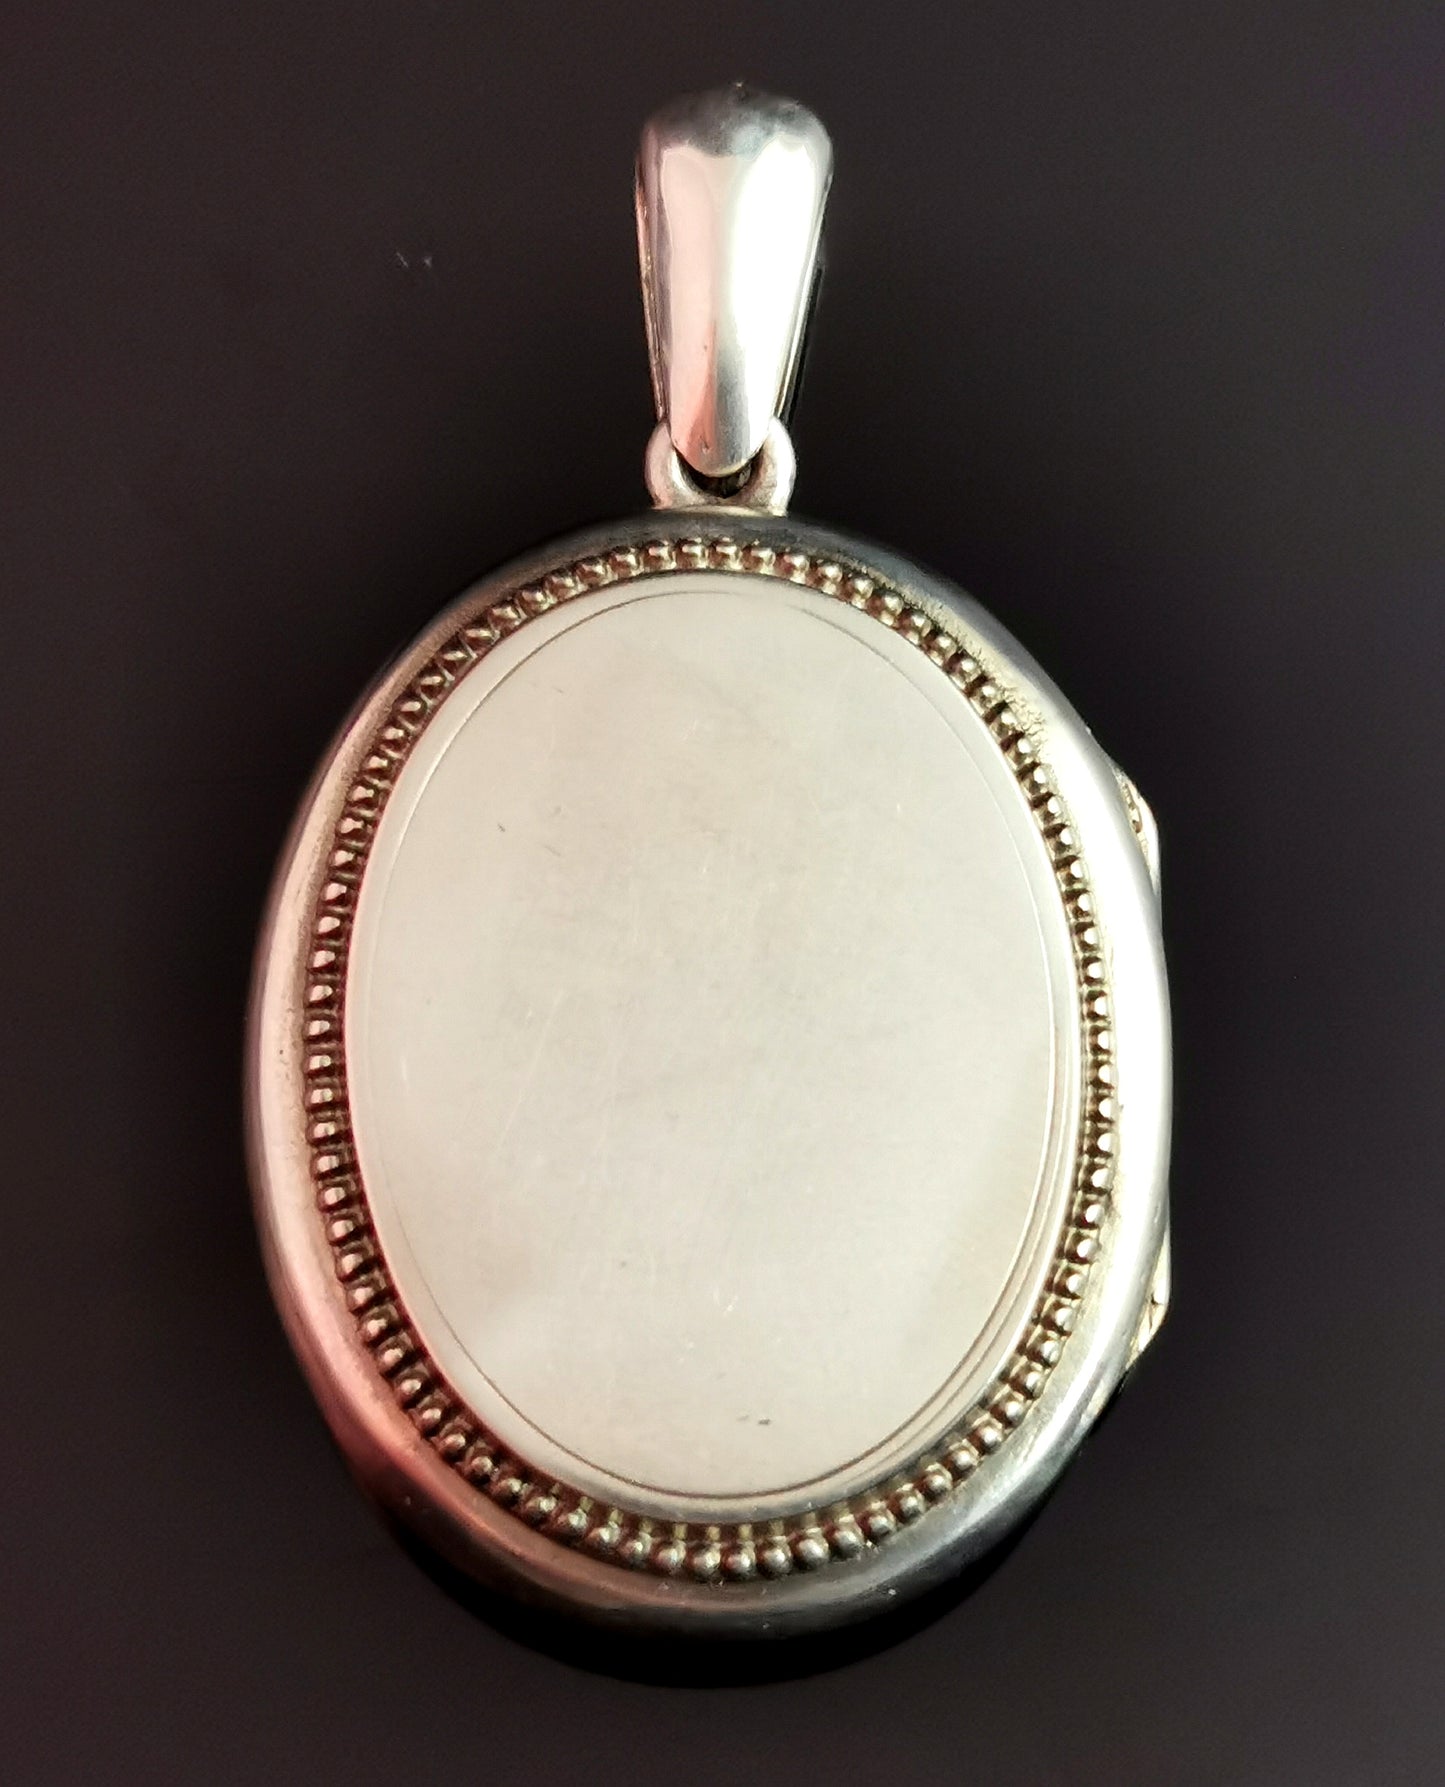 Victorian silver AEI locket, pendant, Amity, Eternity, Infinity